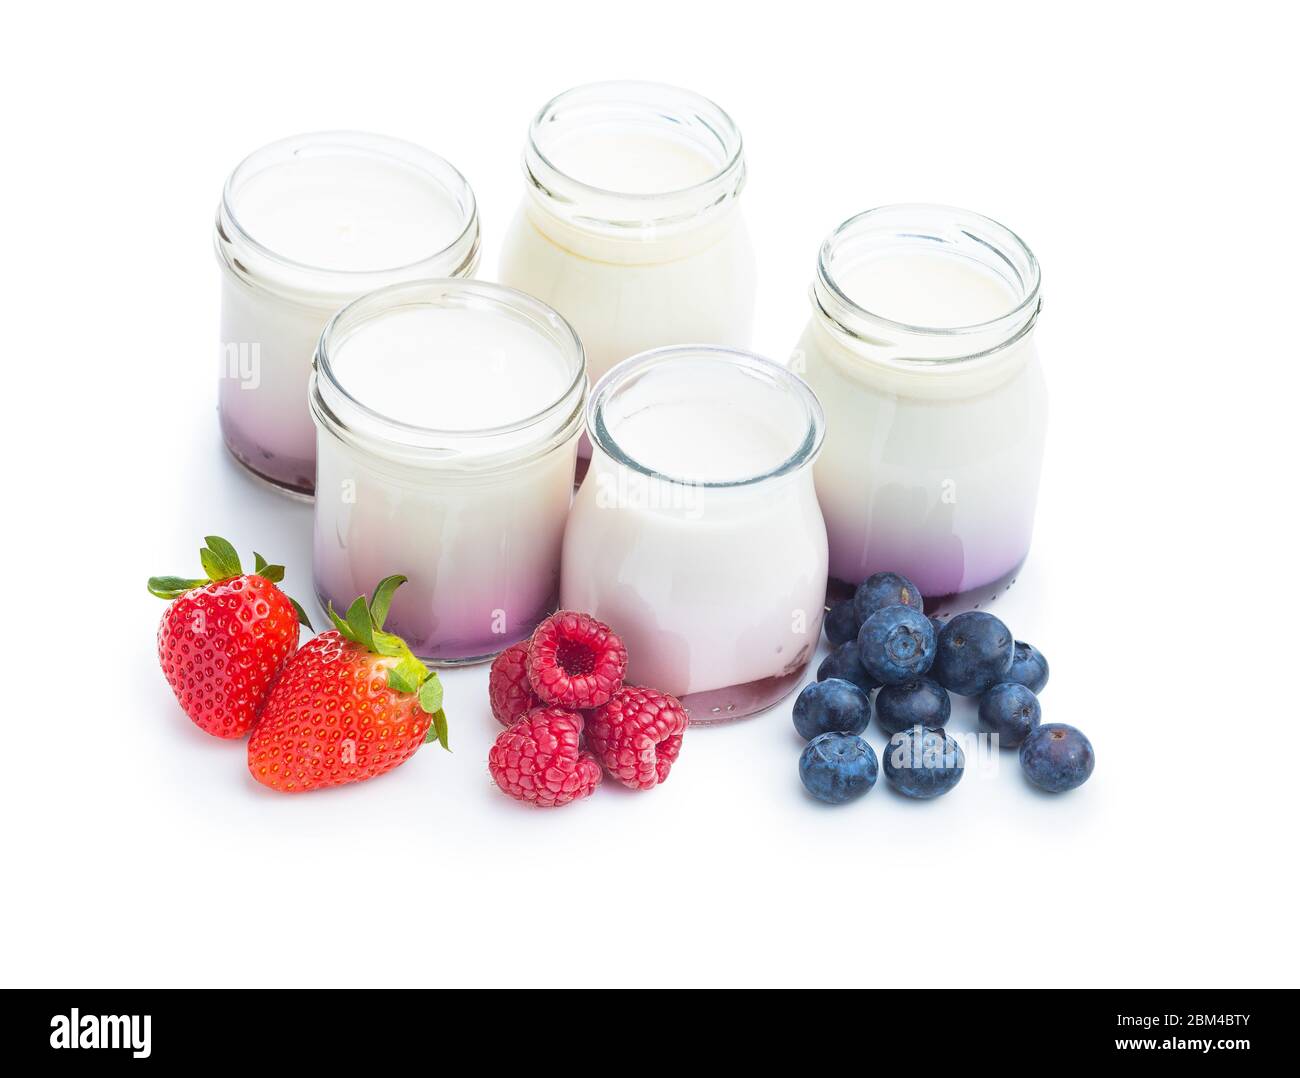 White fruity yogurt in jar and strawberries, blueberries, raspberries isolated on white background. Stock Photo